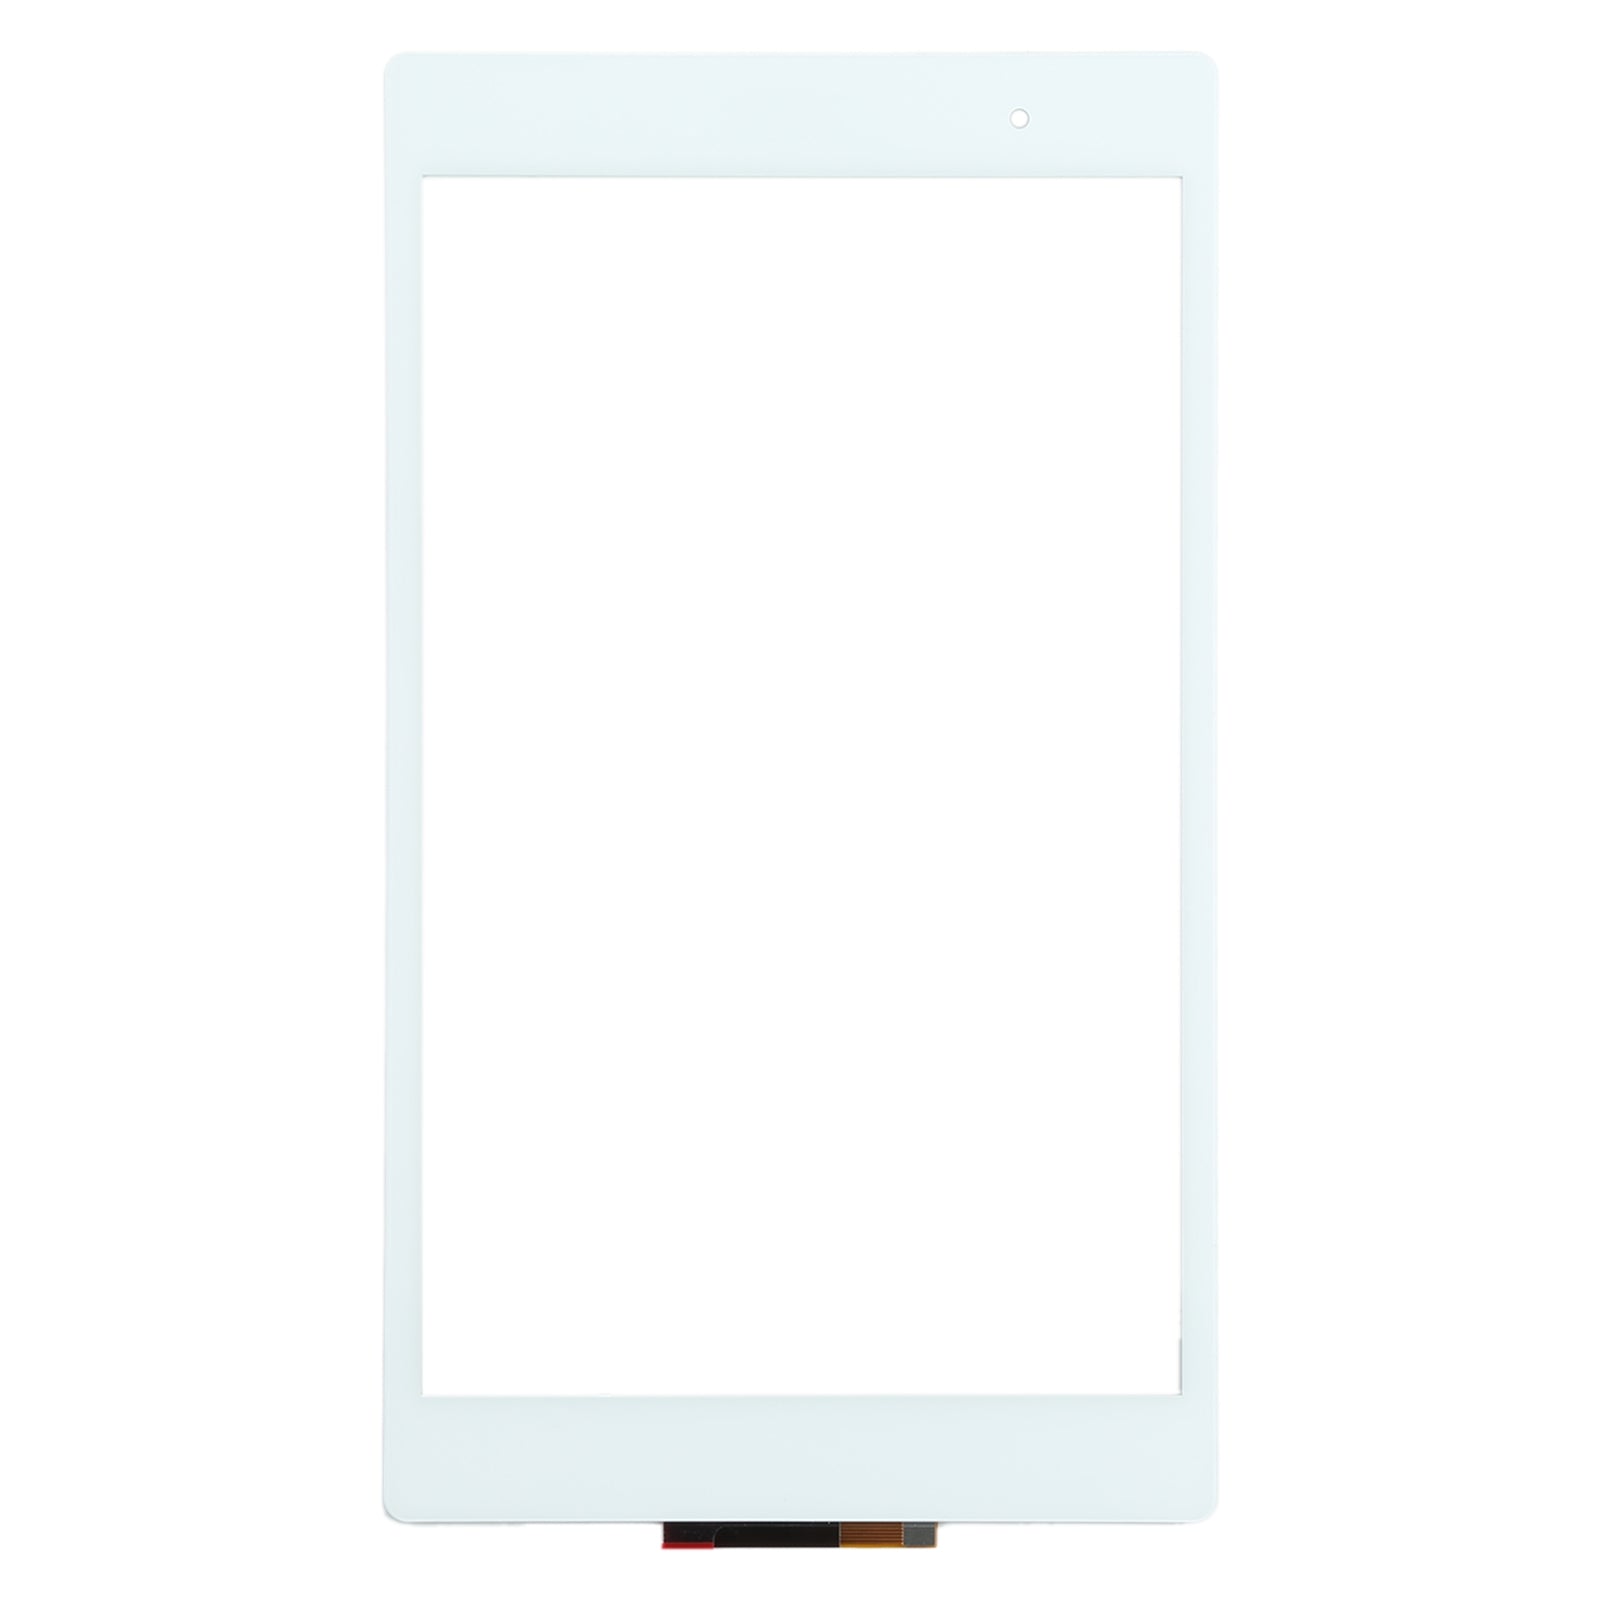 Pantalla Tactil Digitalizador Sony Xperia Z3 Tablet Compact Blanco